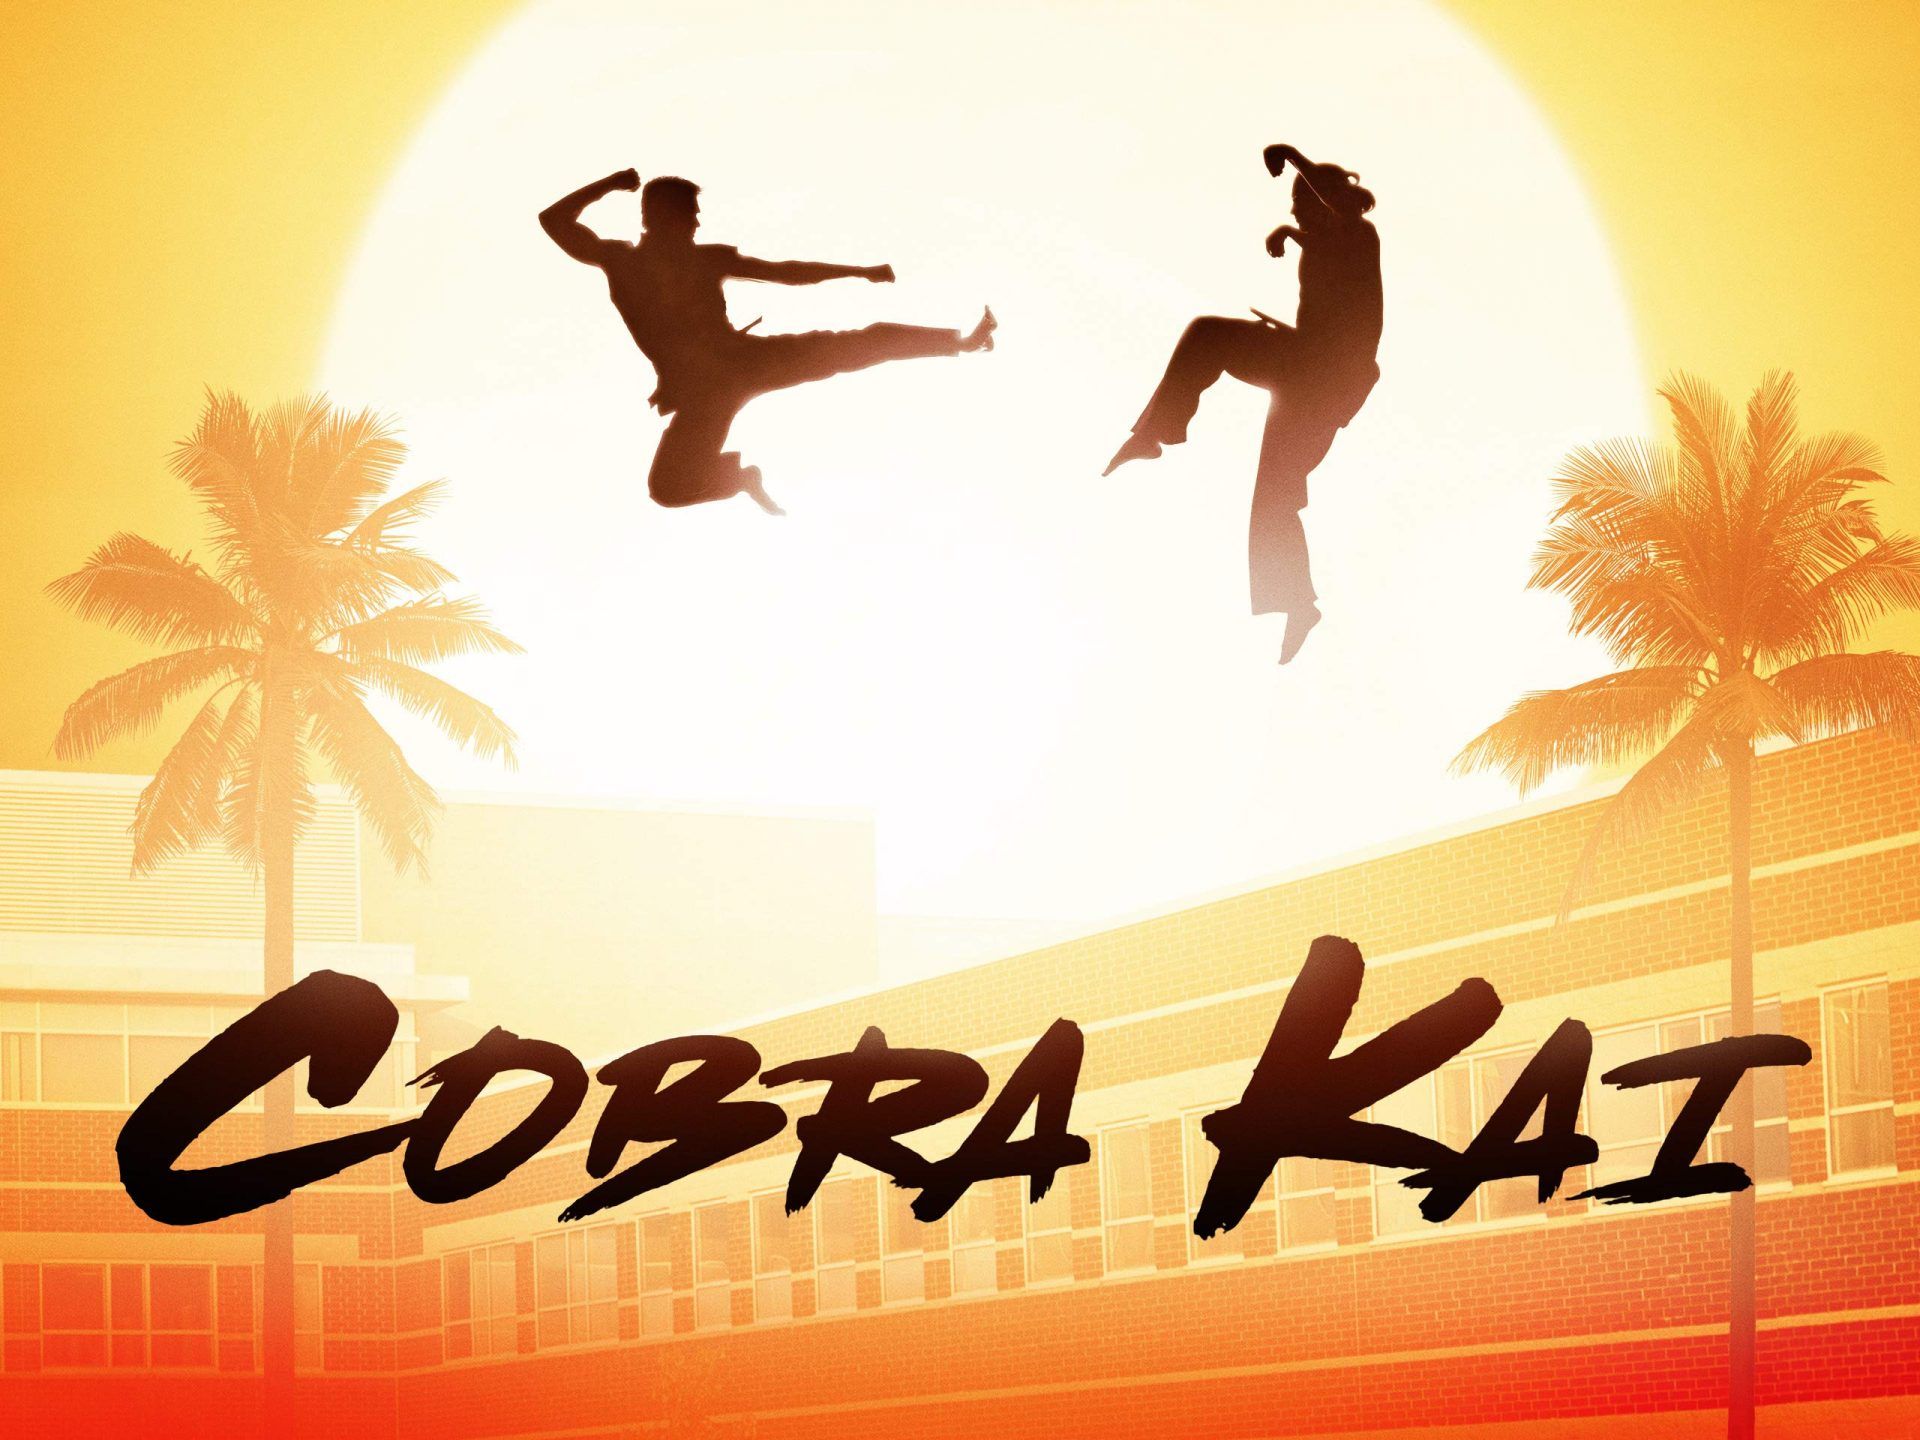 Cobra Kai Season 1: The Story Of Karate Kid Continues